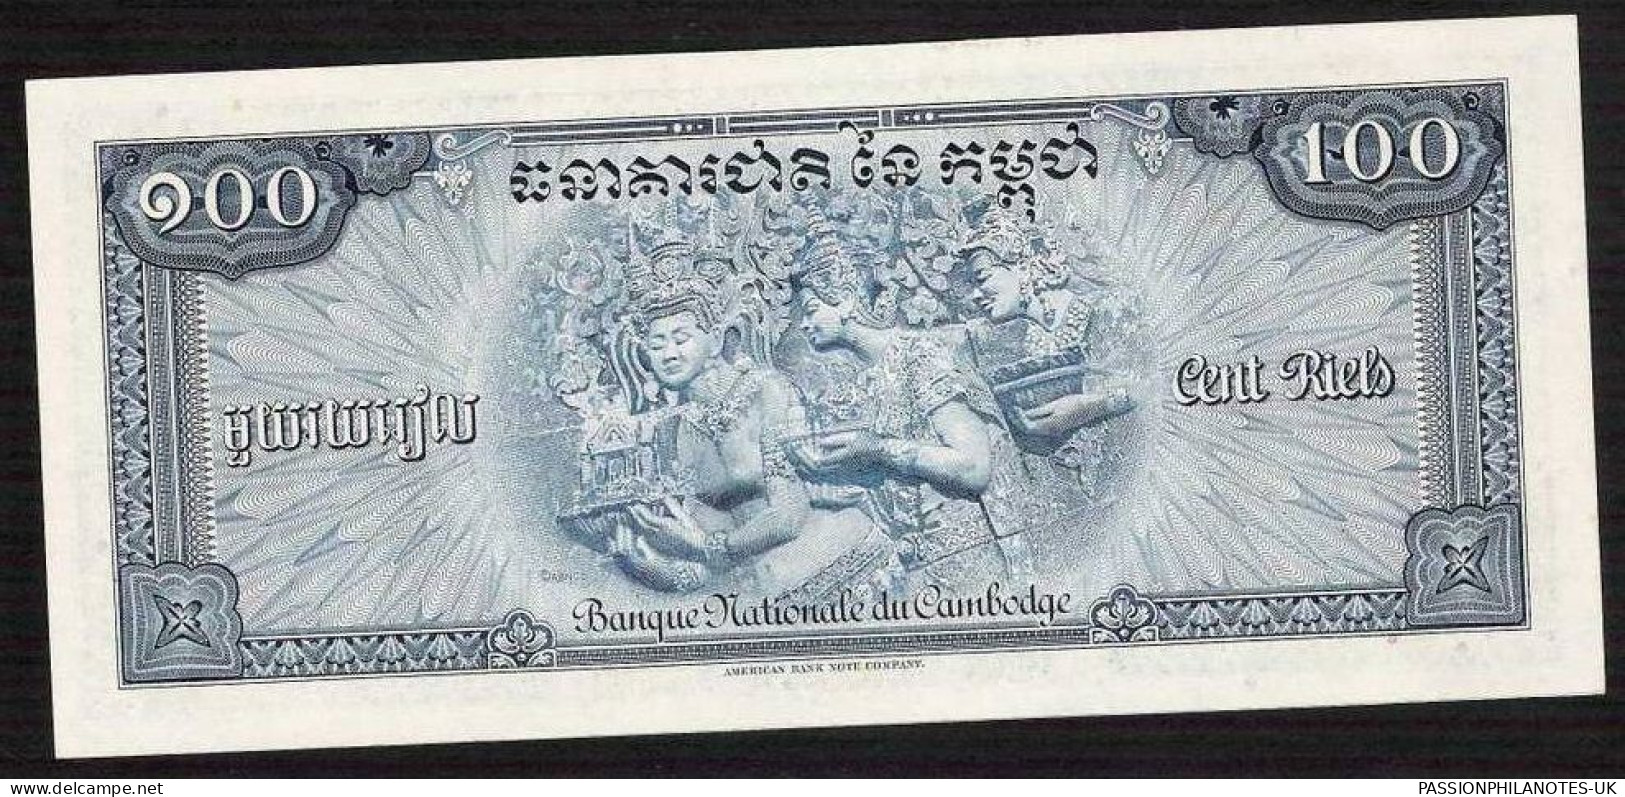 CAMBODIA P13a 100 RIELSS (1956) SIG.3 ABNC UNC.* RARE SIGNATURE VARIETY * - Cambodia